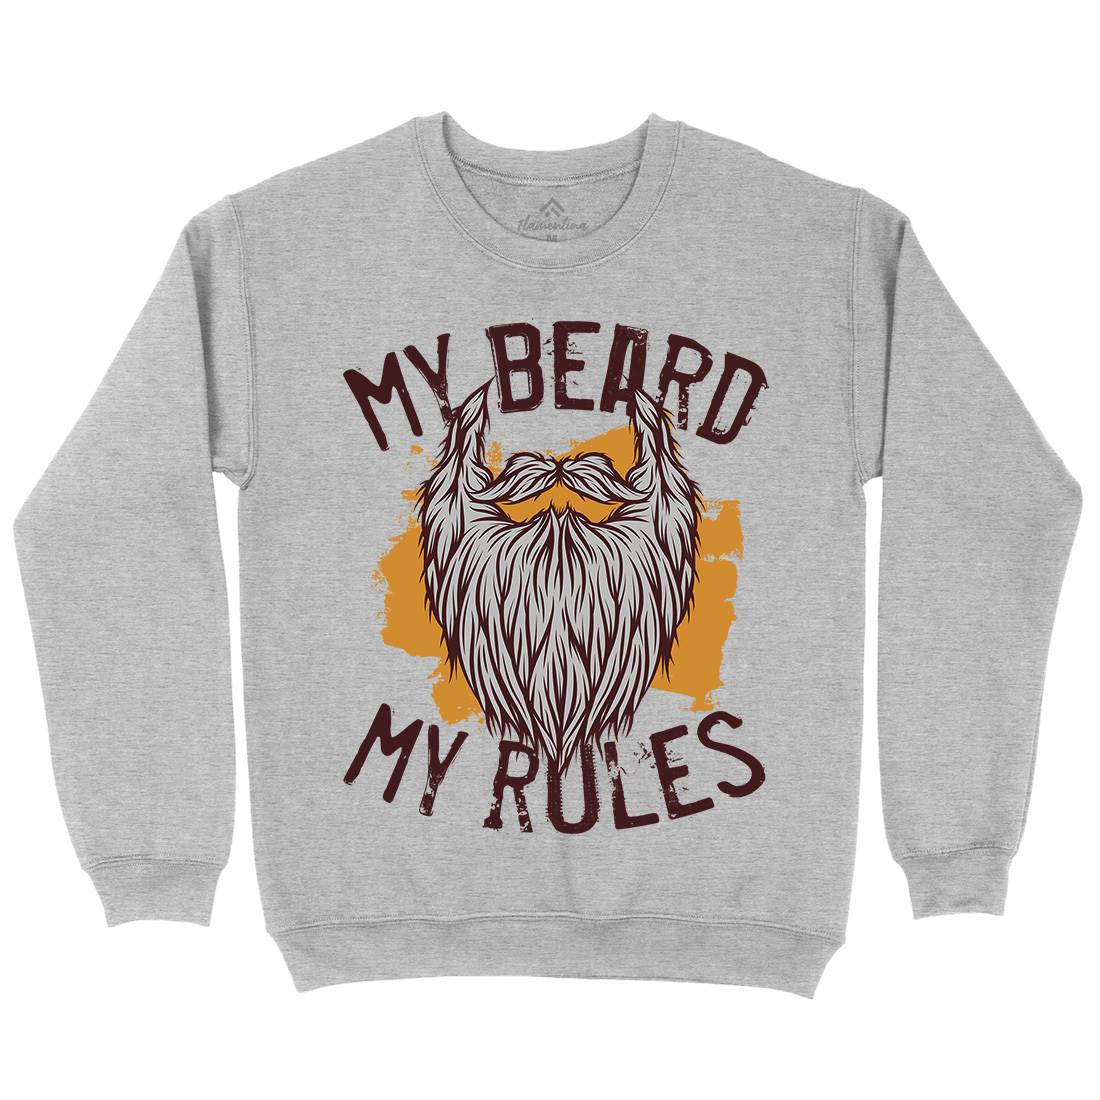 My Beard Rules Mens Crew Neck Sweatshirt Barber C808